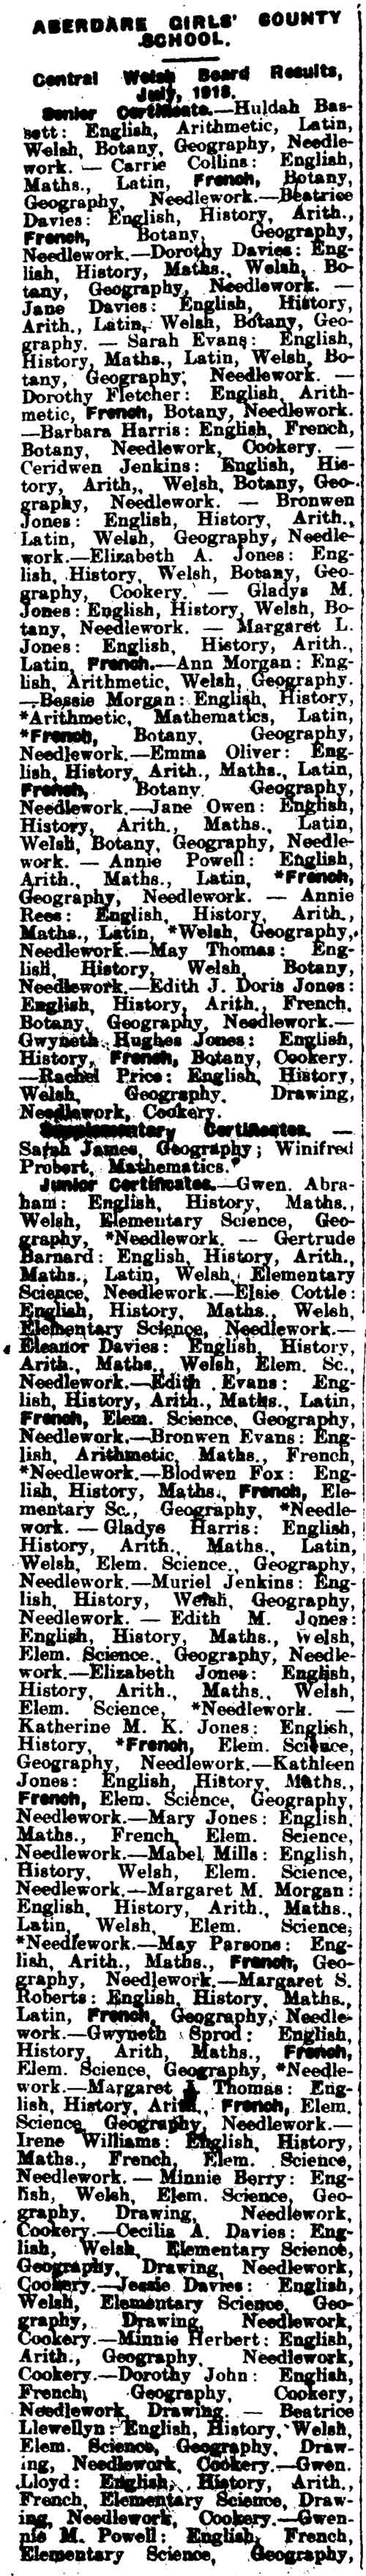 1918 Girls 1 School Cert Results